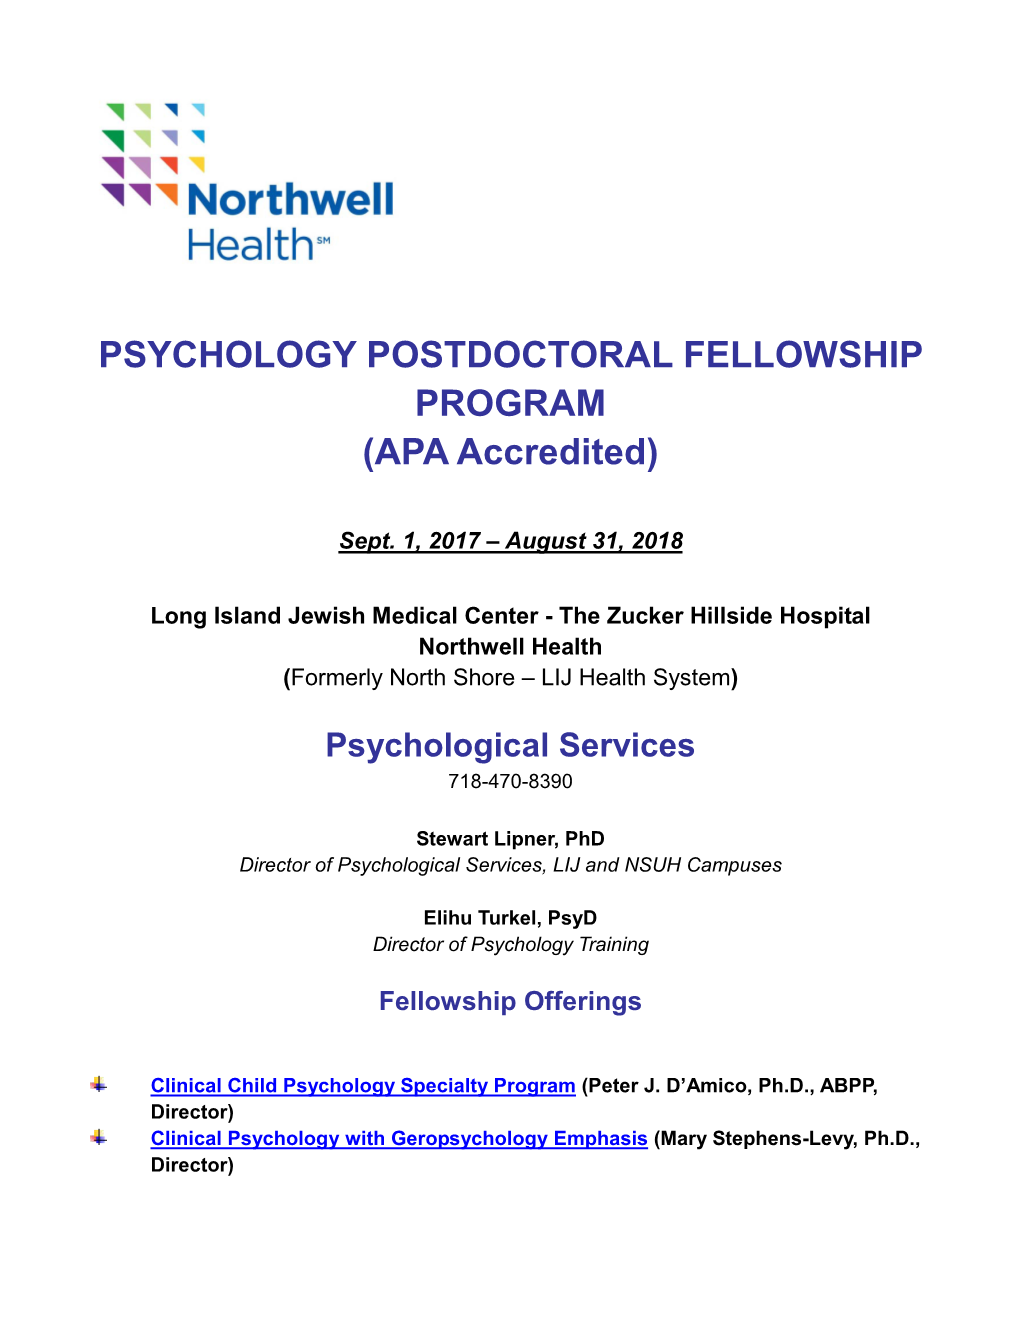 PSYCHOLOGY POSTDOCTORAL FELLOWSHIP PROGRAM (APA Accredited)